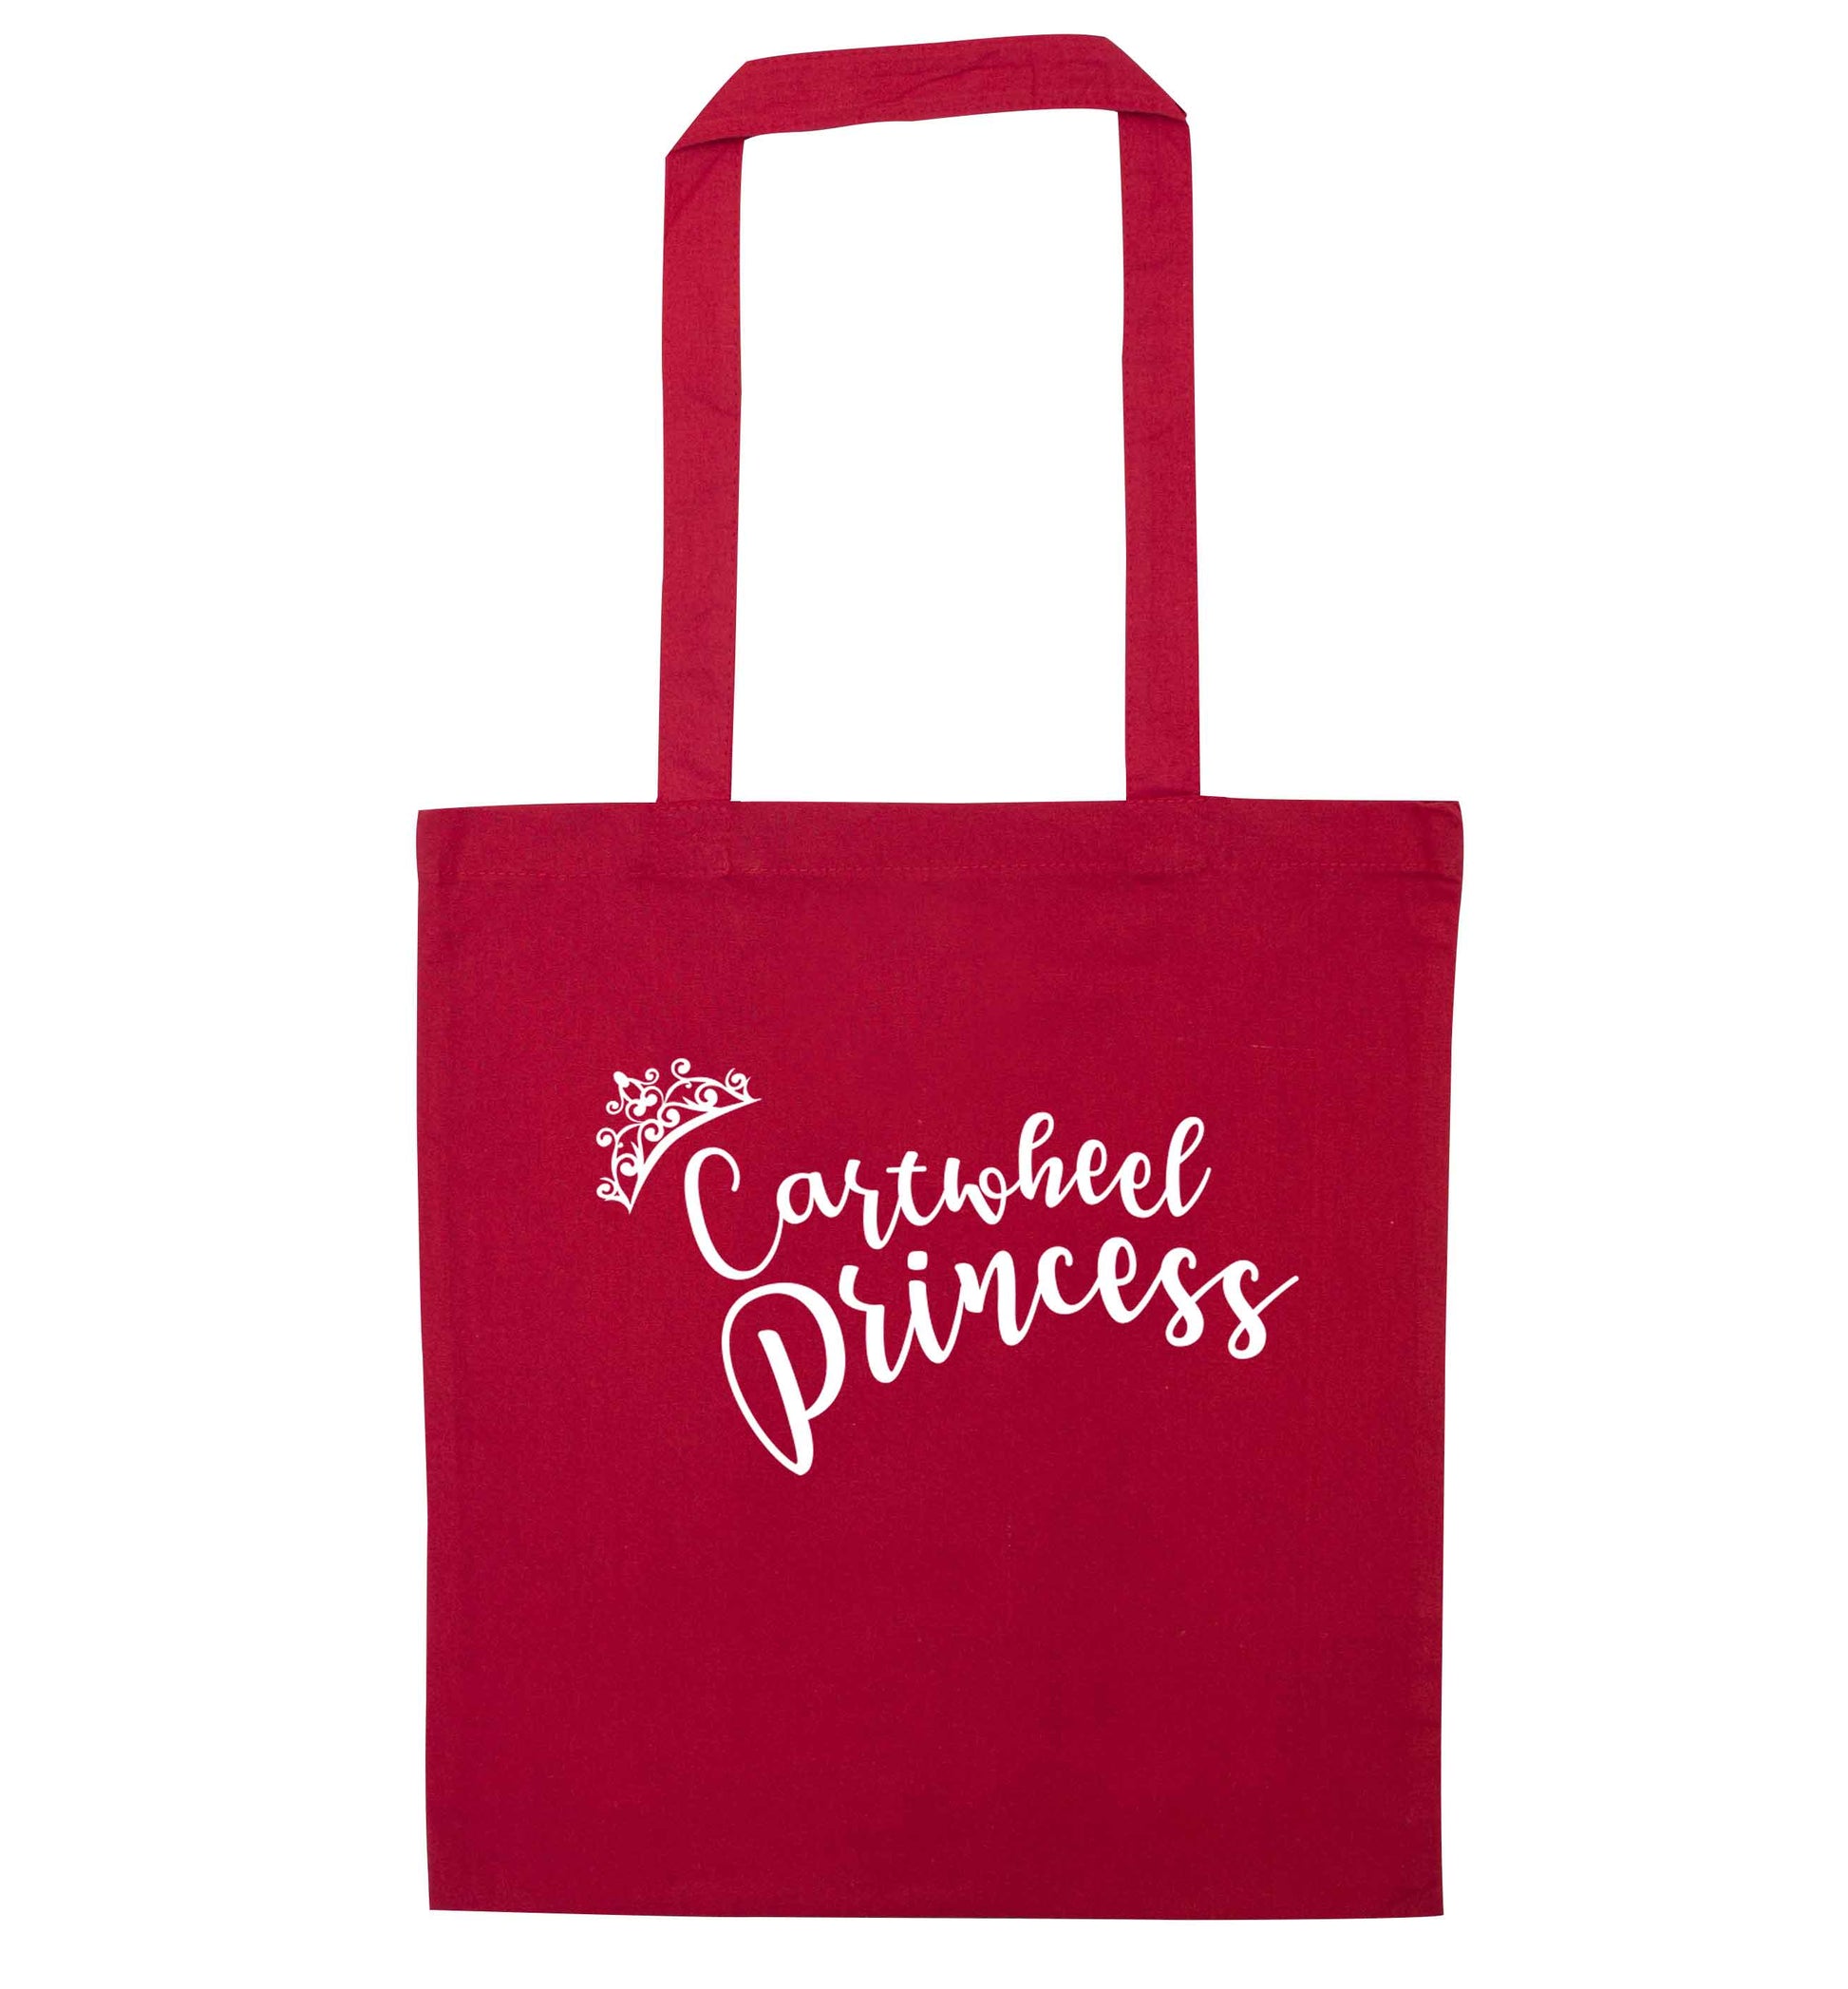 Cartwheel princess red tote bag